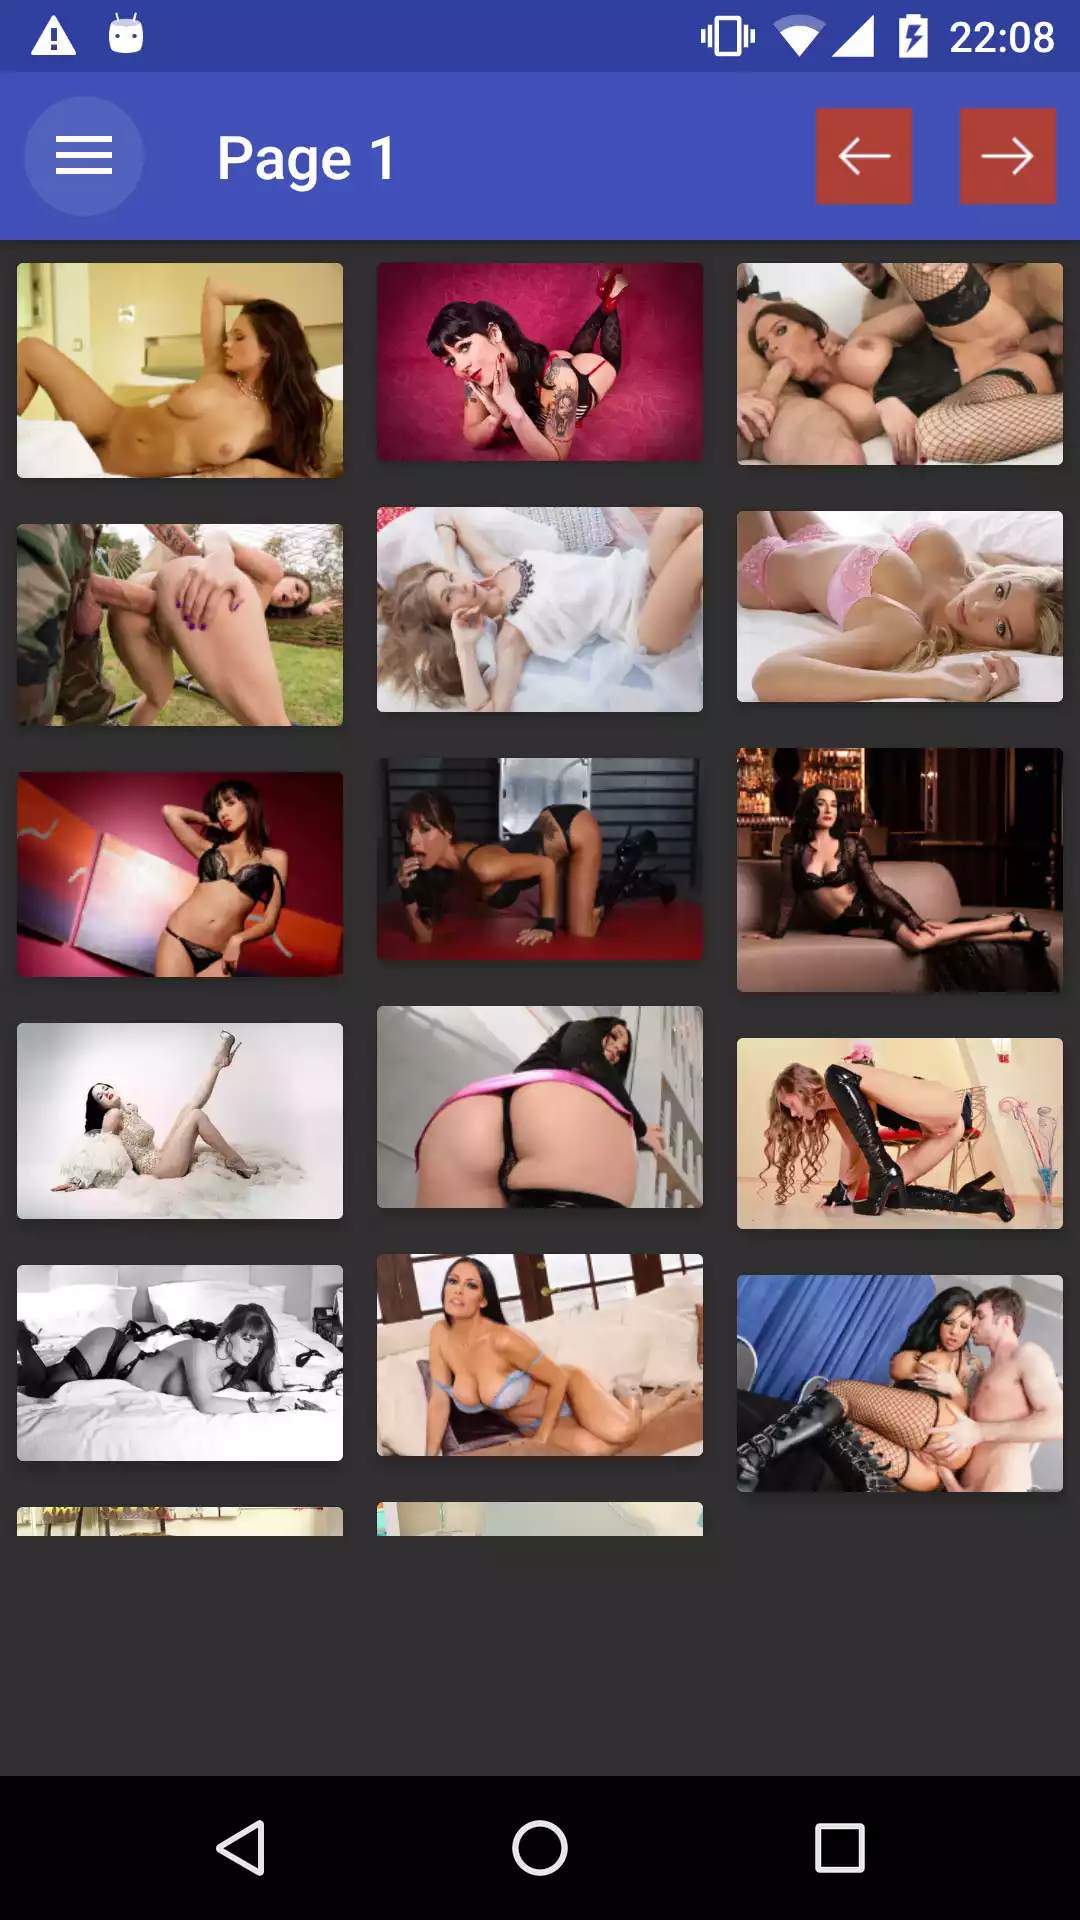 Pornstar Wallpapers 2 picture,free,pics,pic,futanari,wallpapers,photos,hentai,hot,app,apps,android,hintai,phone,porn,pornstar,best,sexy,apk,wallpaper